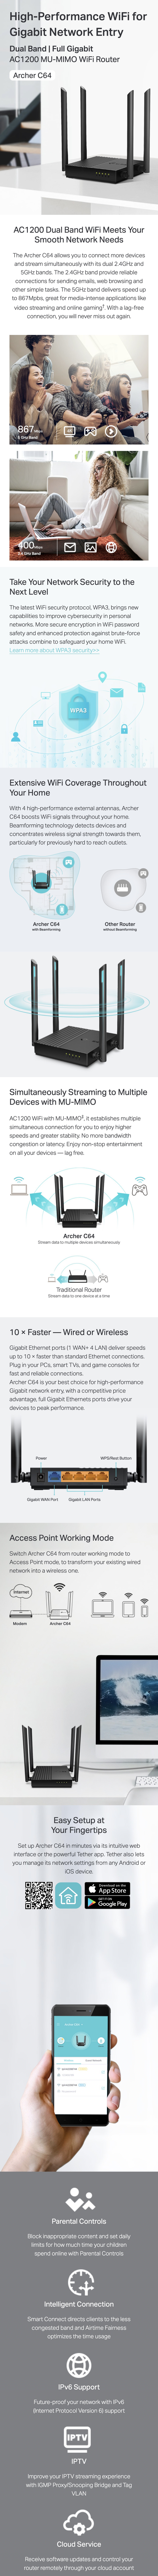 TP-Link-Archer-C64-AC1200-Wireless-MU-MIMO-WiFi-Router-Description